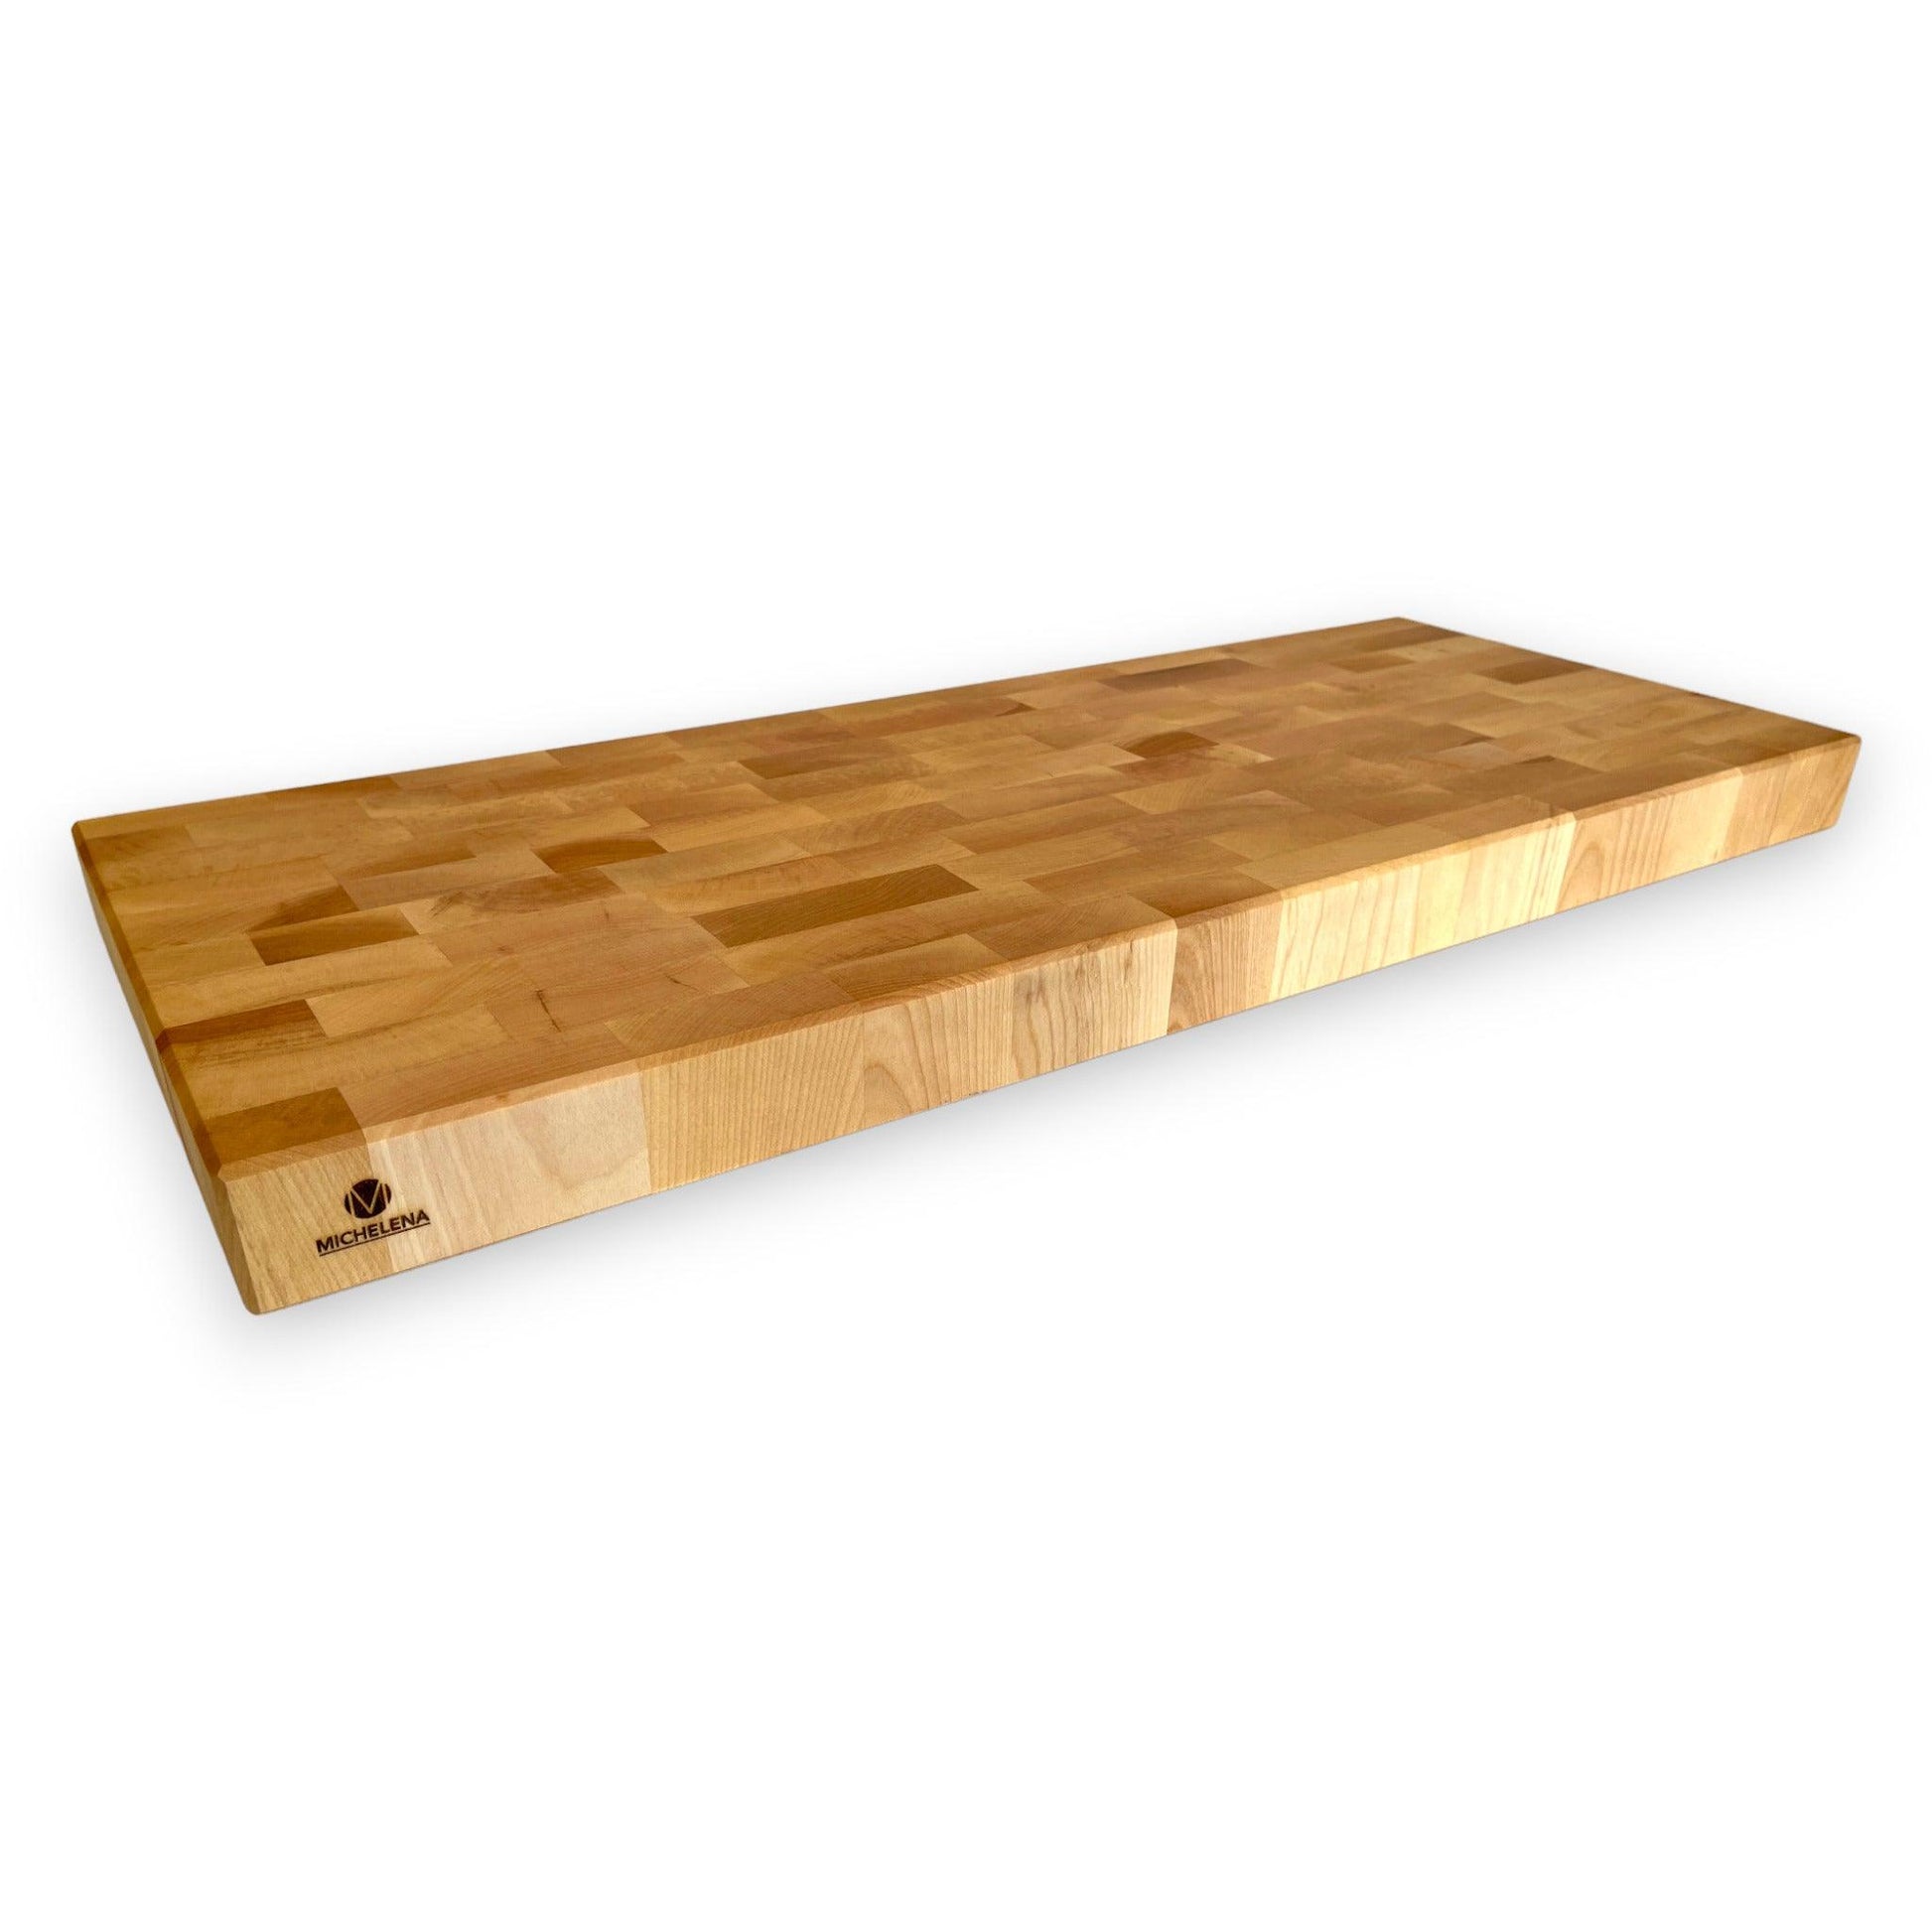 2" Cherry wood rectangular cutting board - BOISWOOD